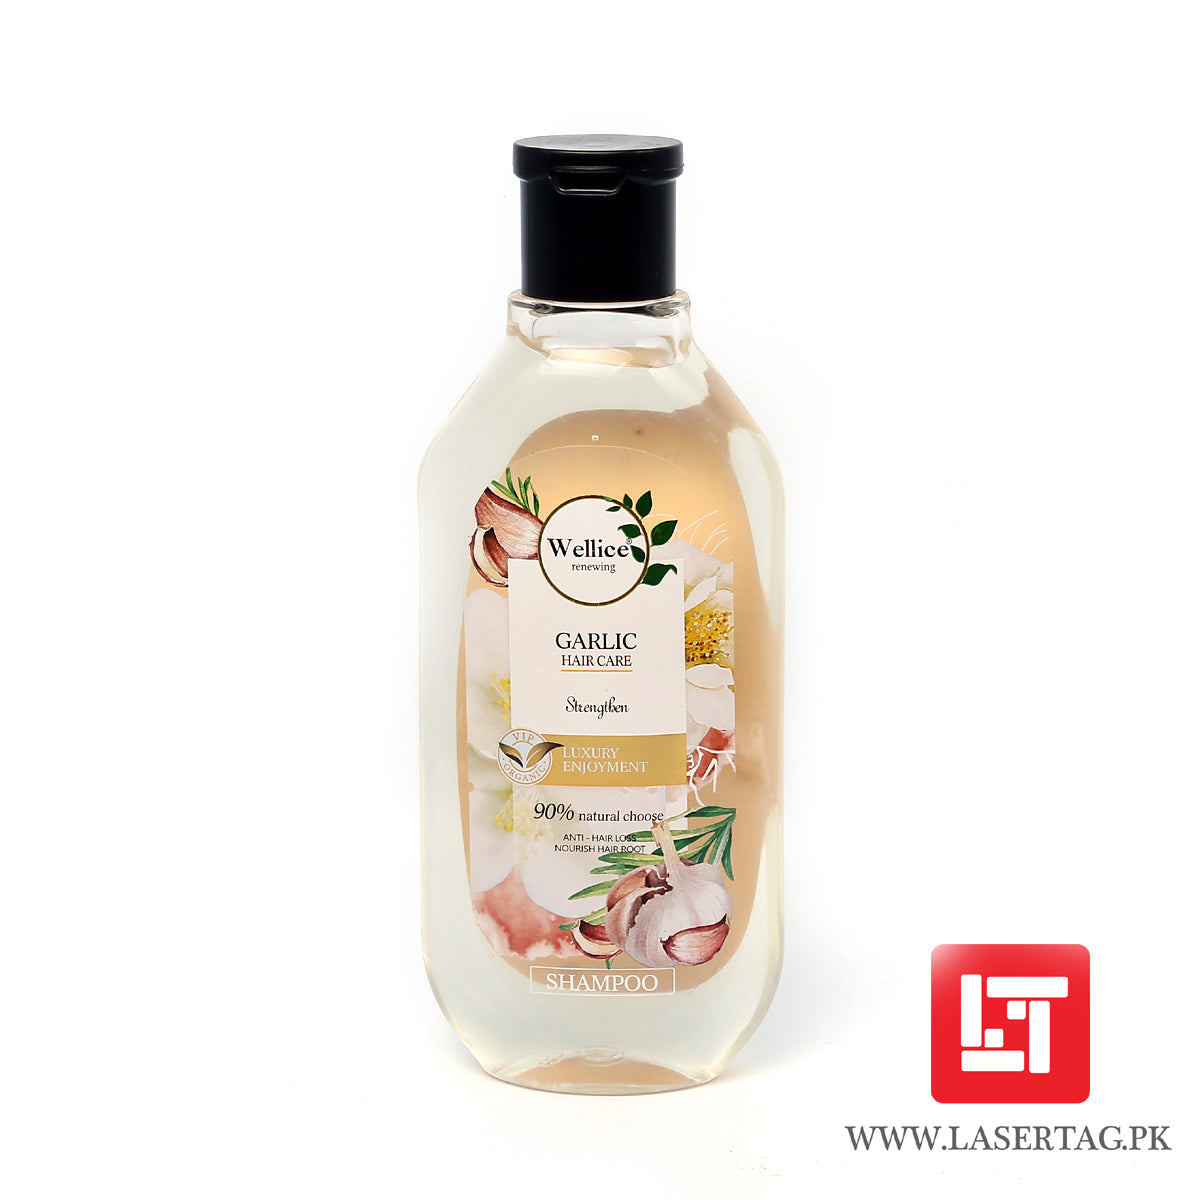 Wellice New Garlic Shampoo Strengthen Anti Hair Loss Nourish Hair Root 400g freeshipping - lasertag.pk